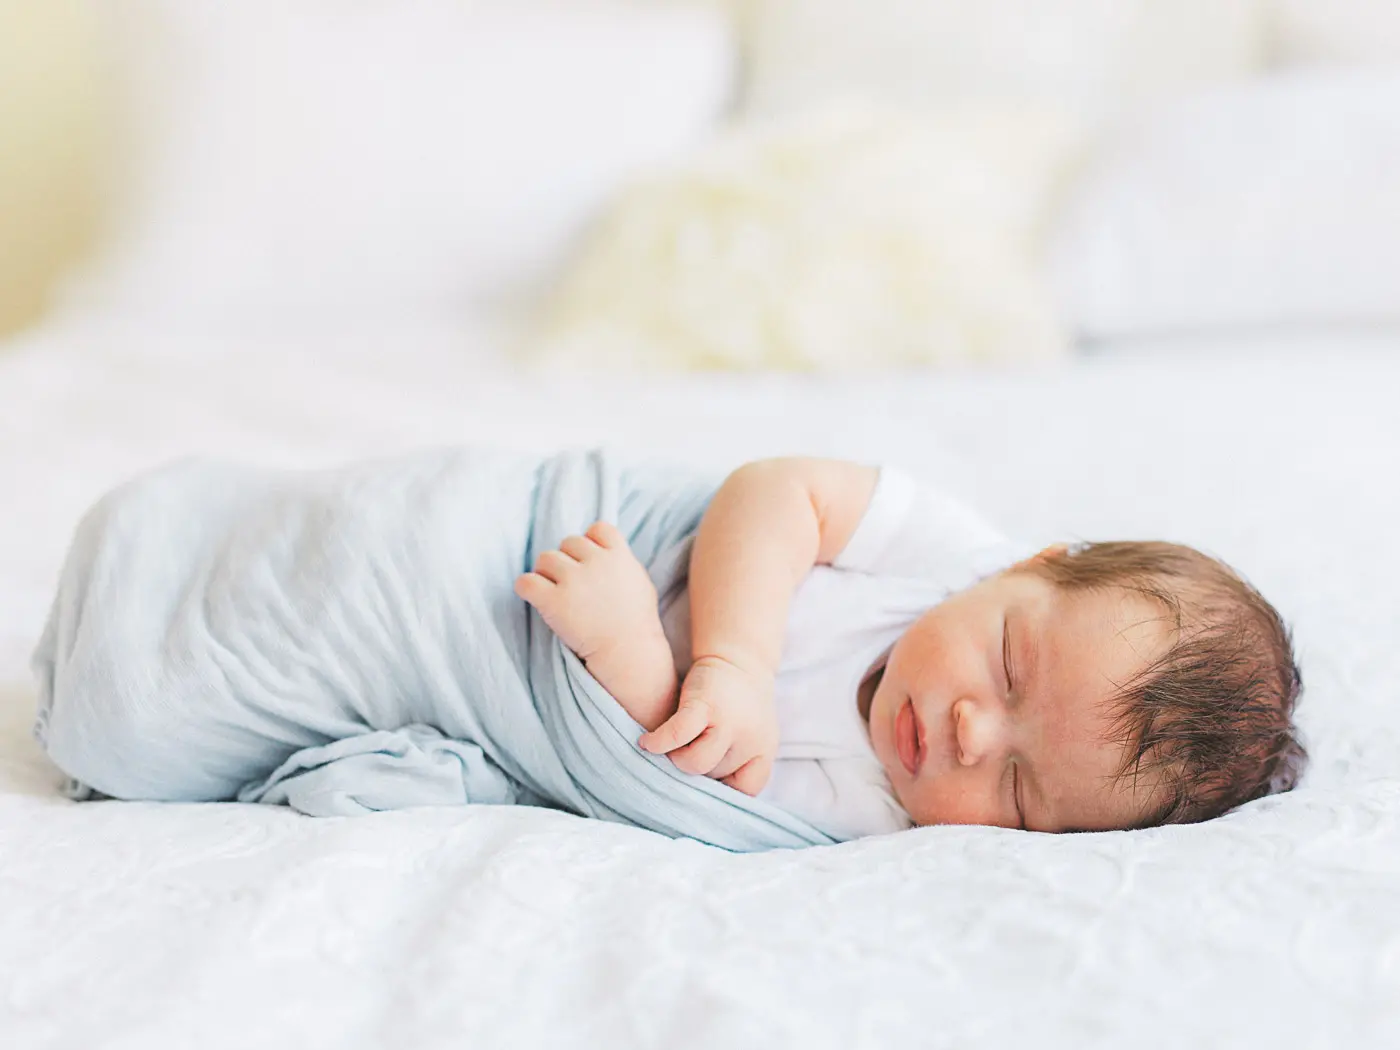 Portrait of newborn baby boy in blue swaddle